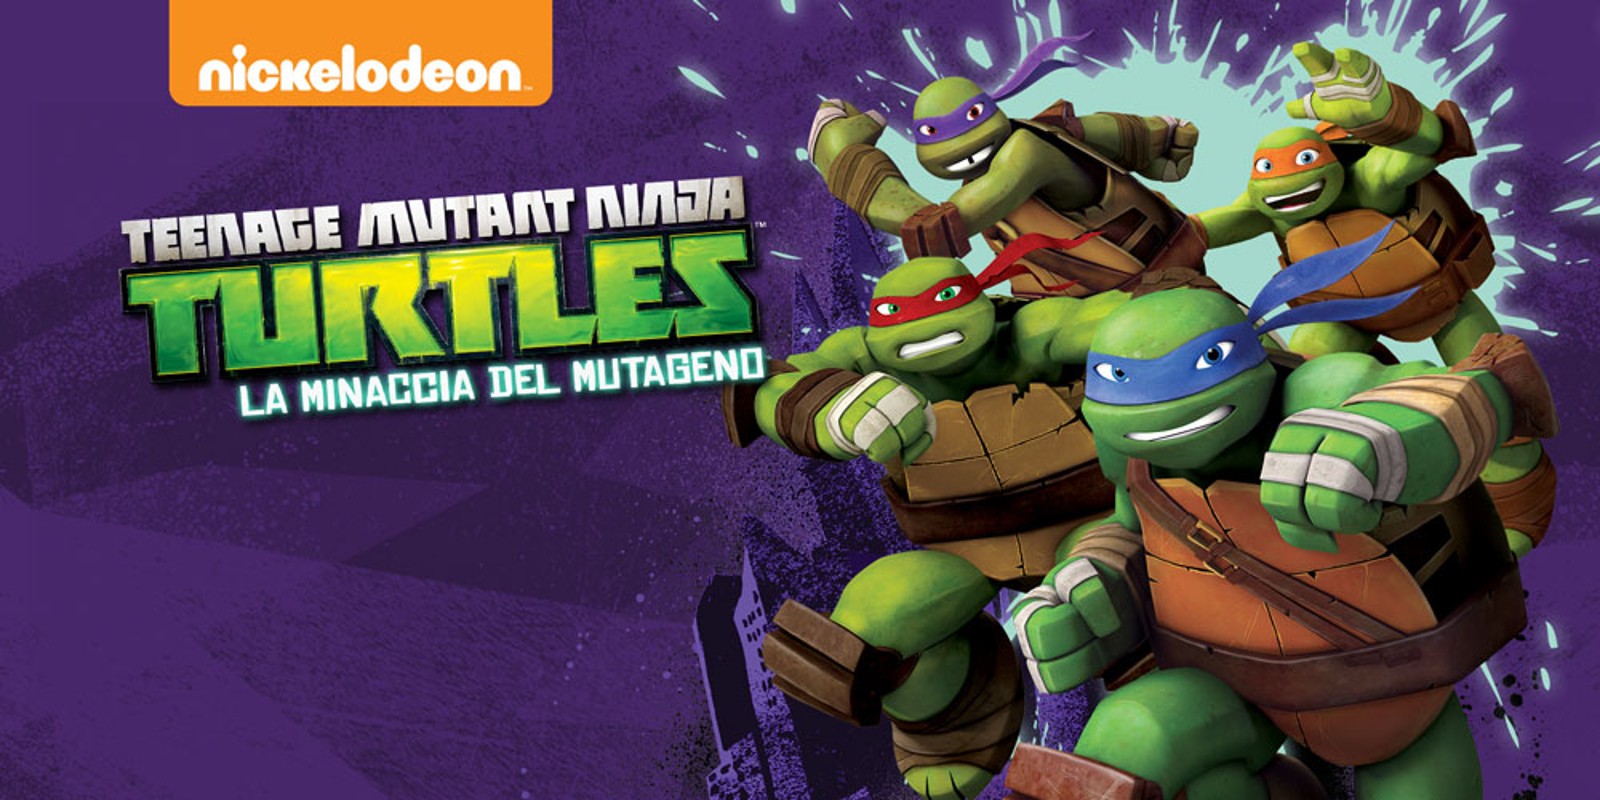 Teenage Mutant Ninja Turtles: La Minaccia del Mutageno